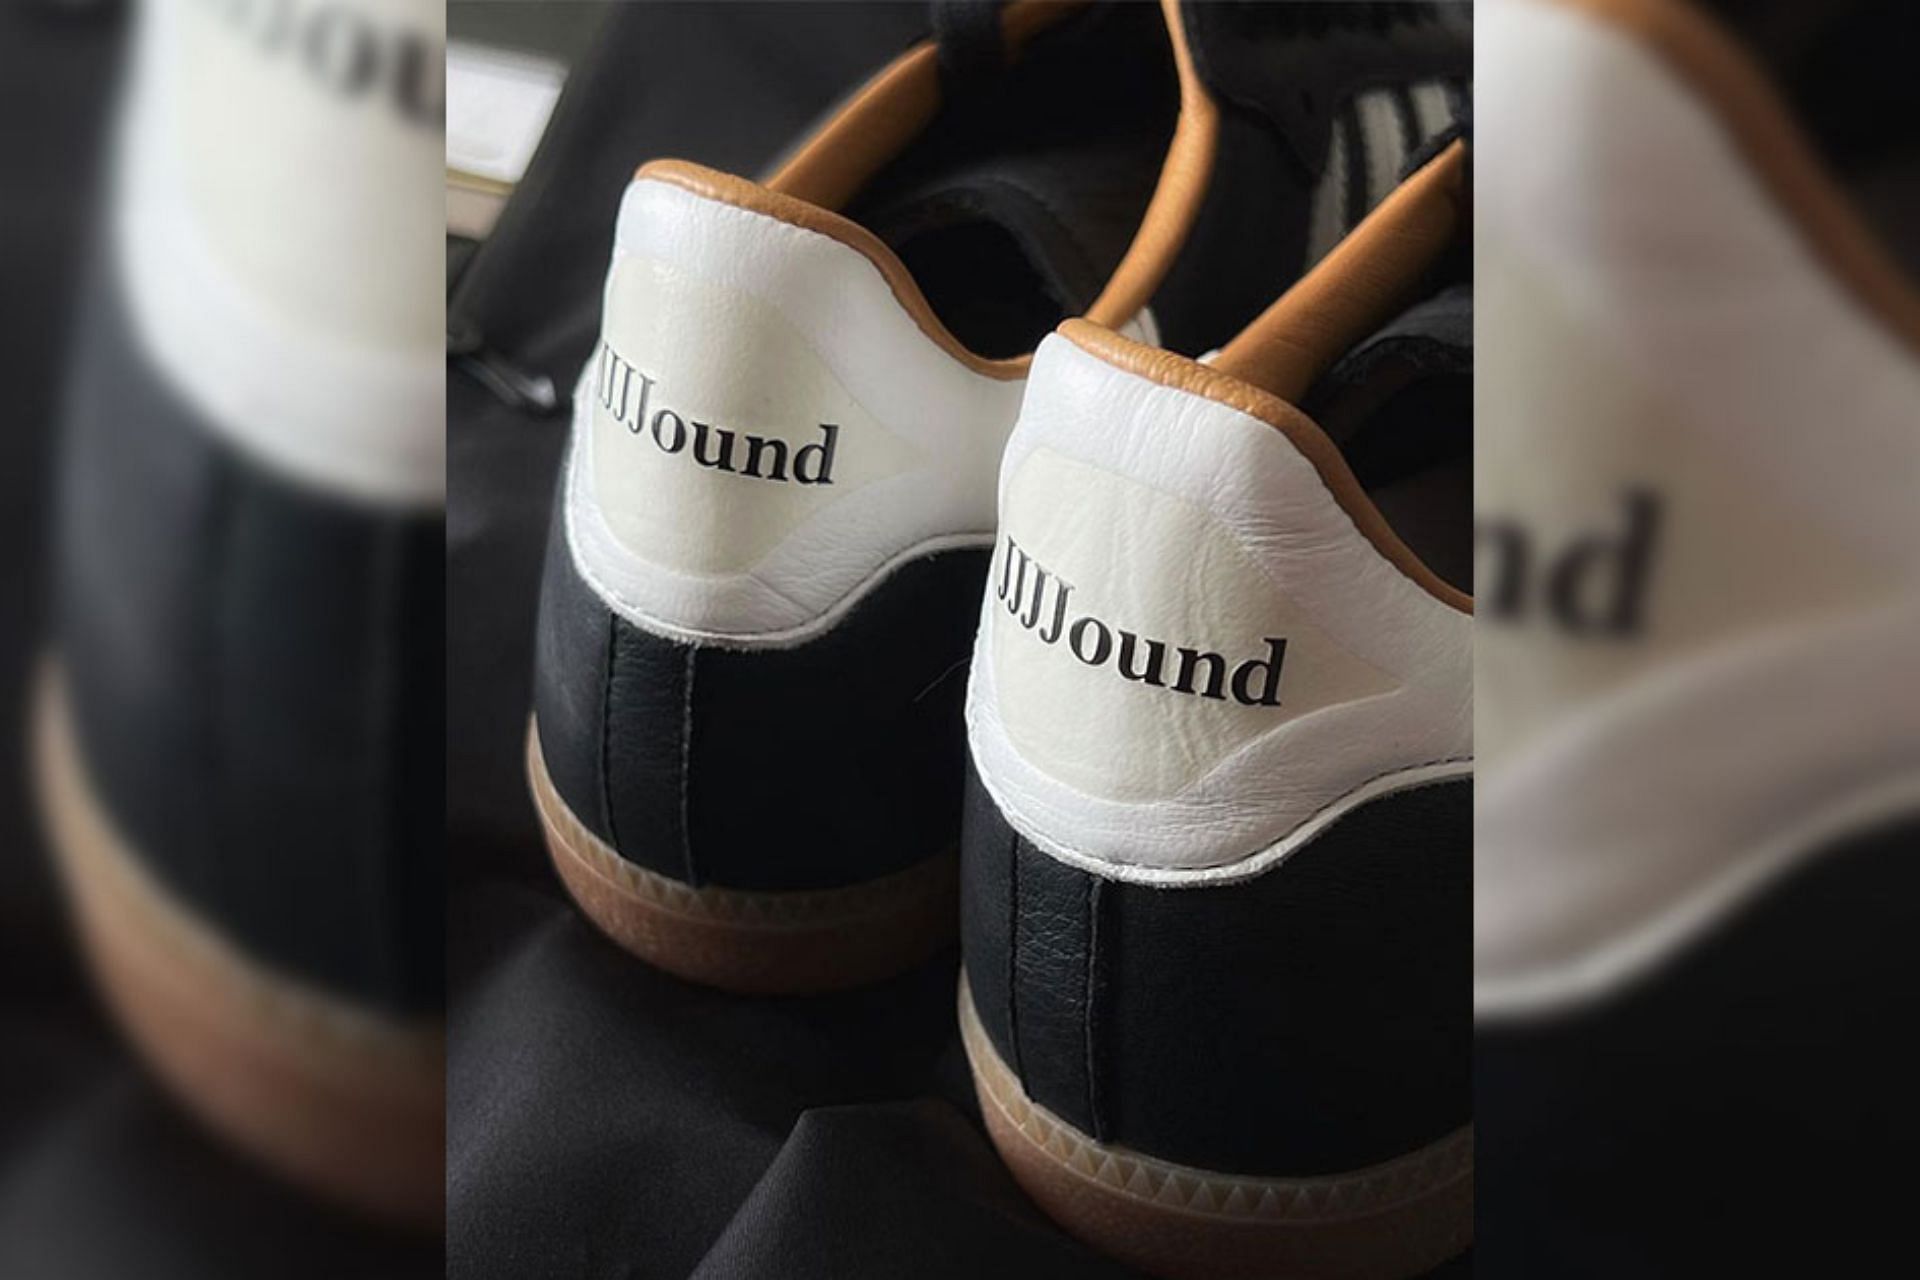 JJJJound x Adidas Samba sneaker capsule collection (Image via Instagram/@Thrift2.000)